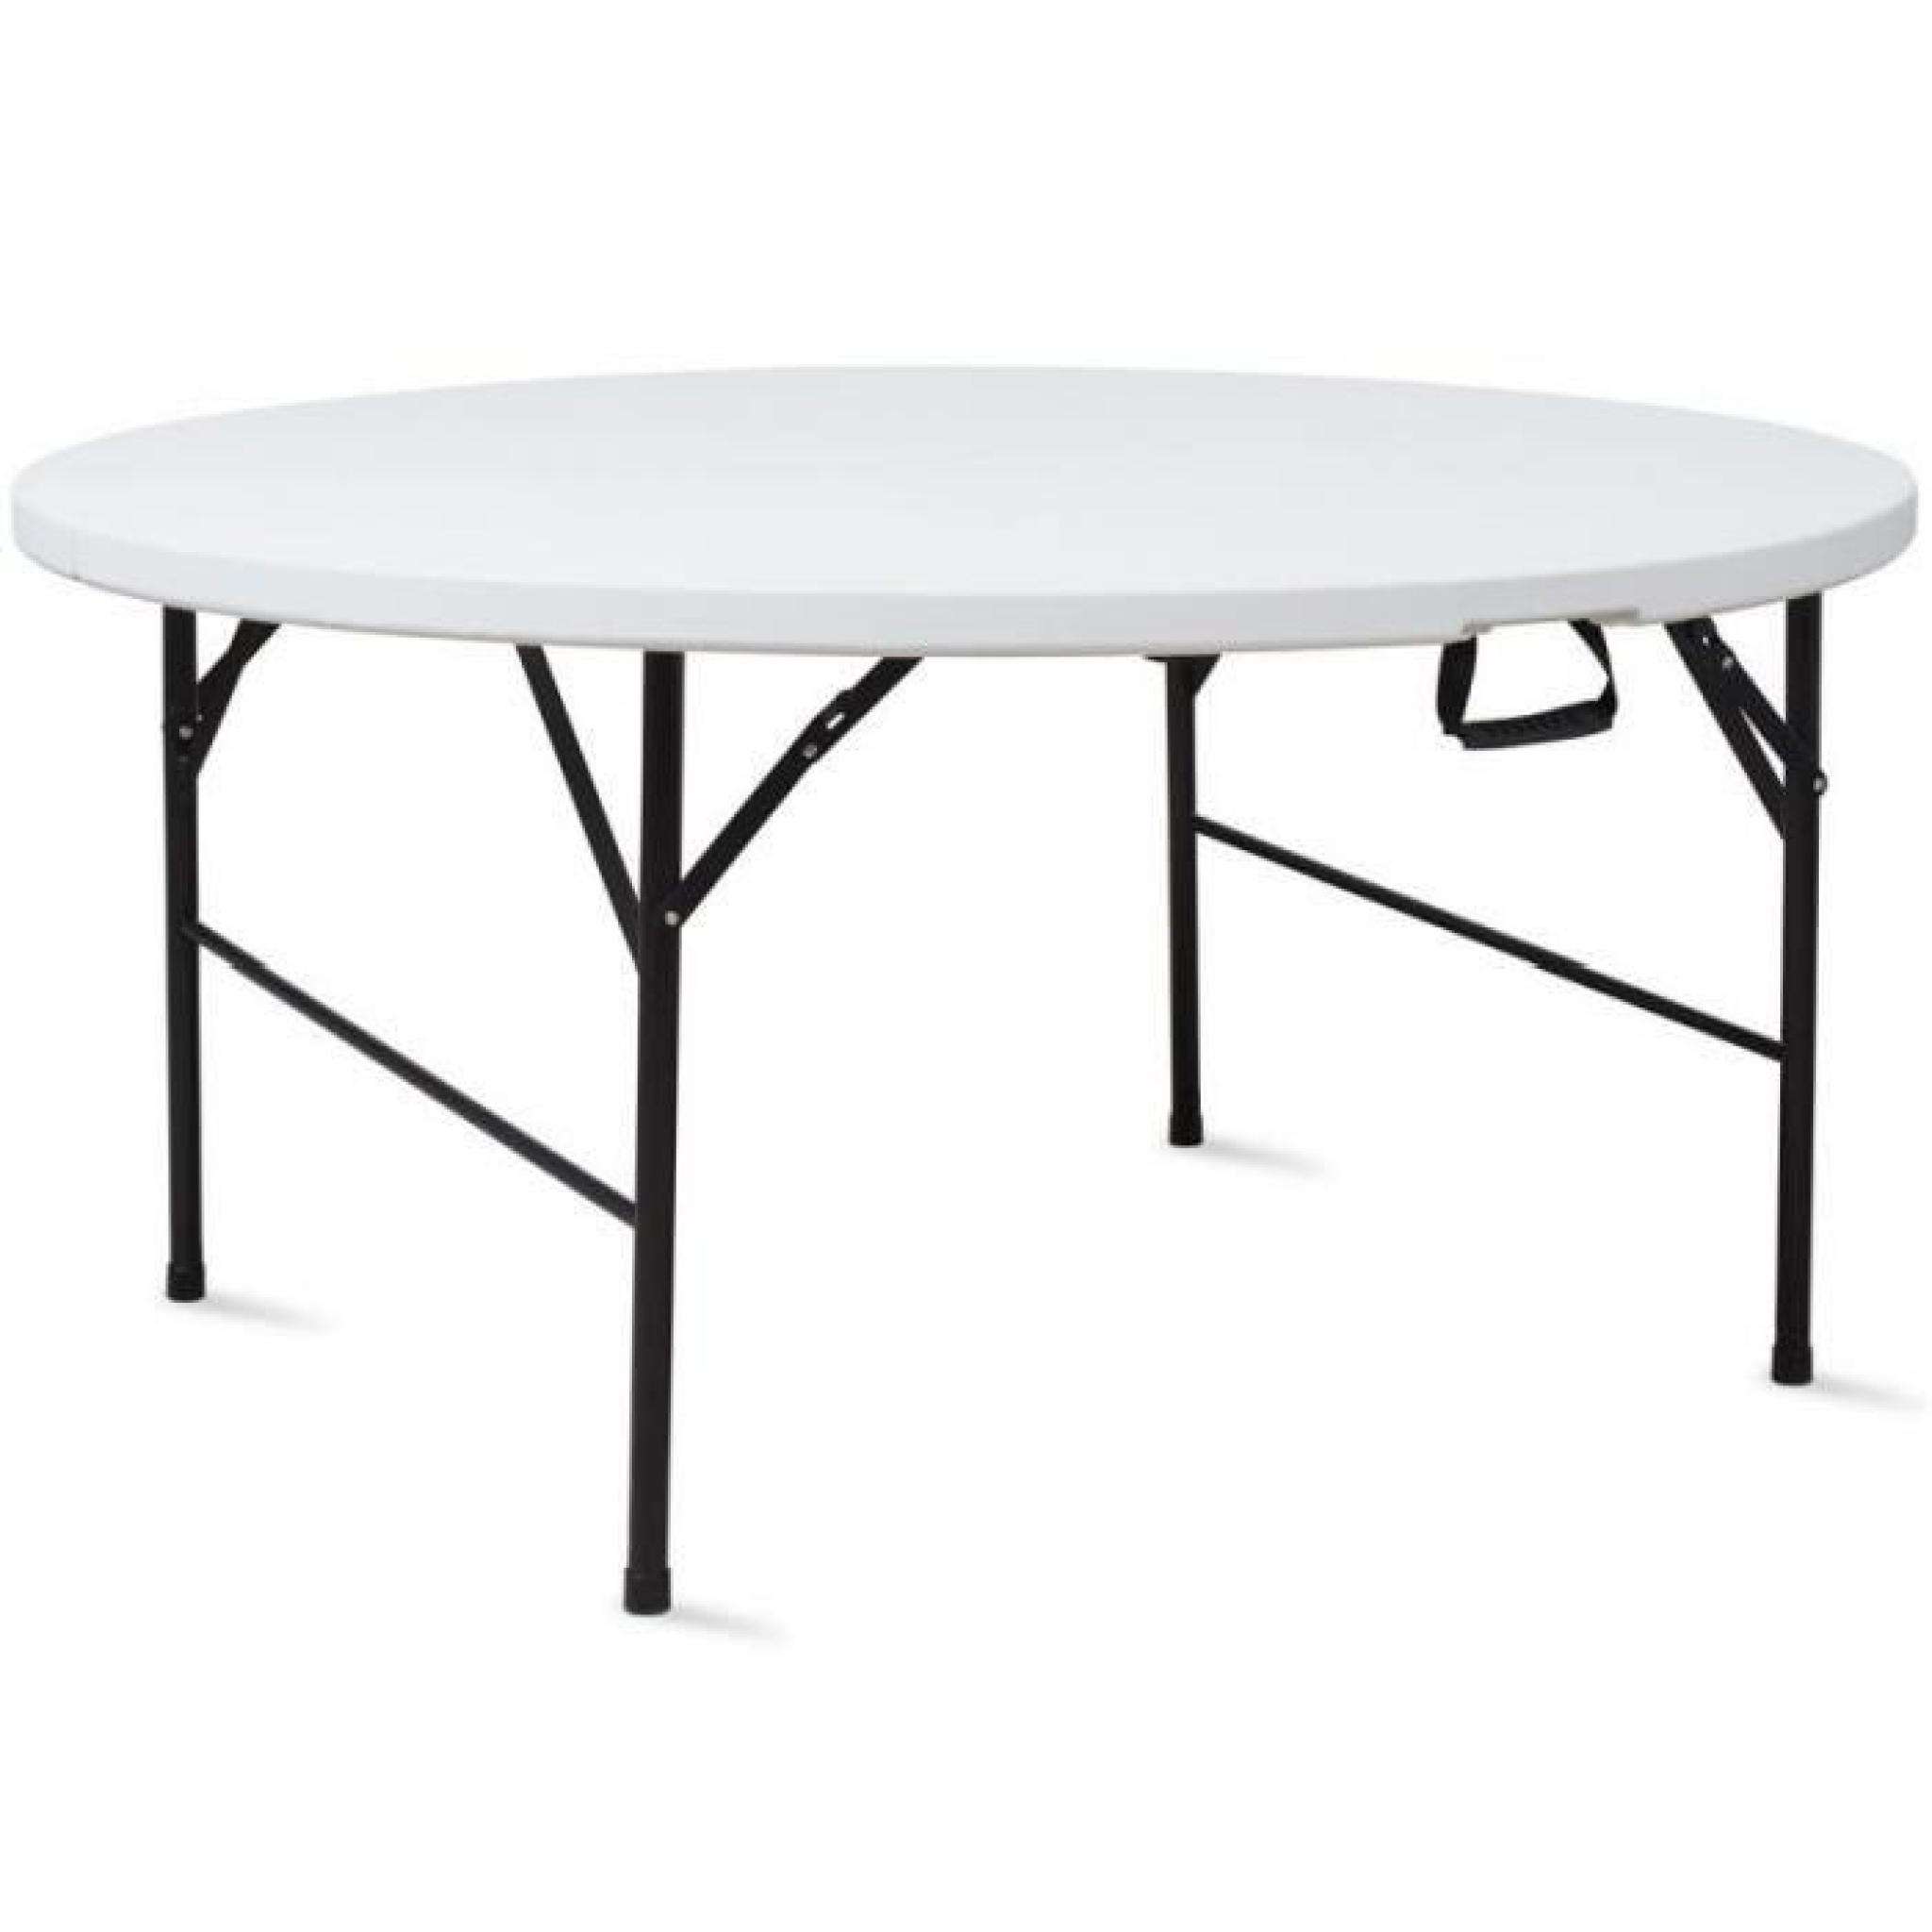 Table pliante ronde 180 cm portable